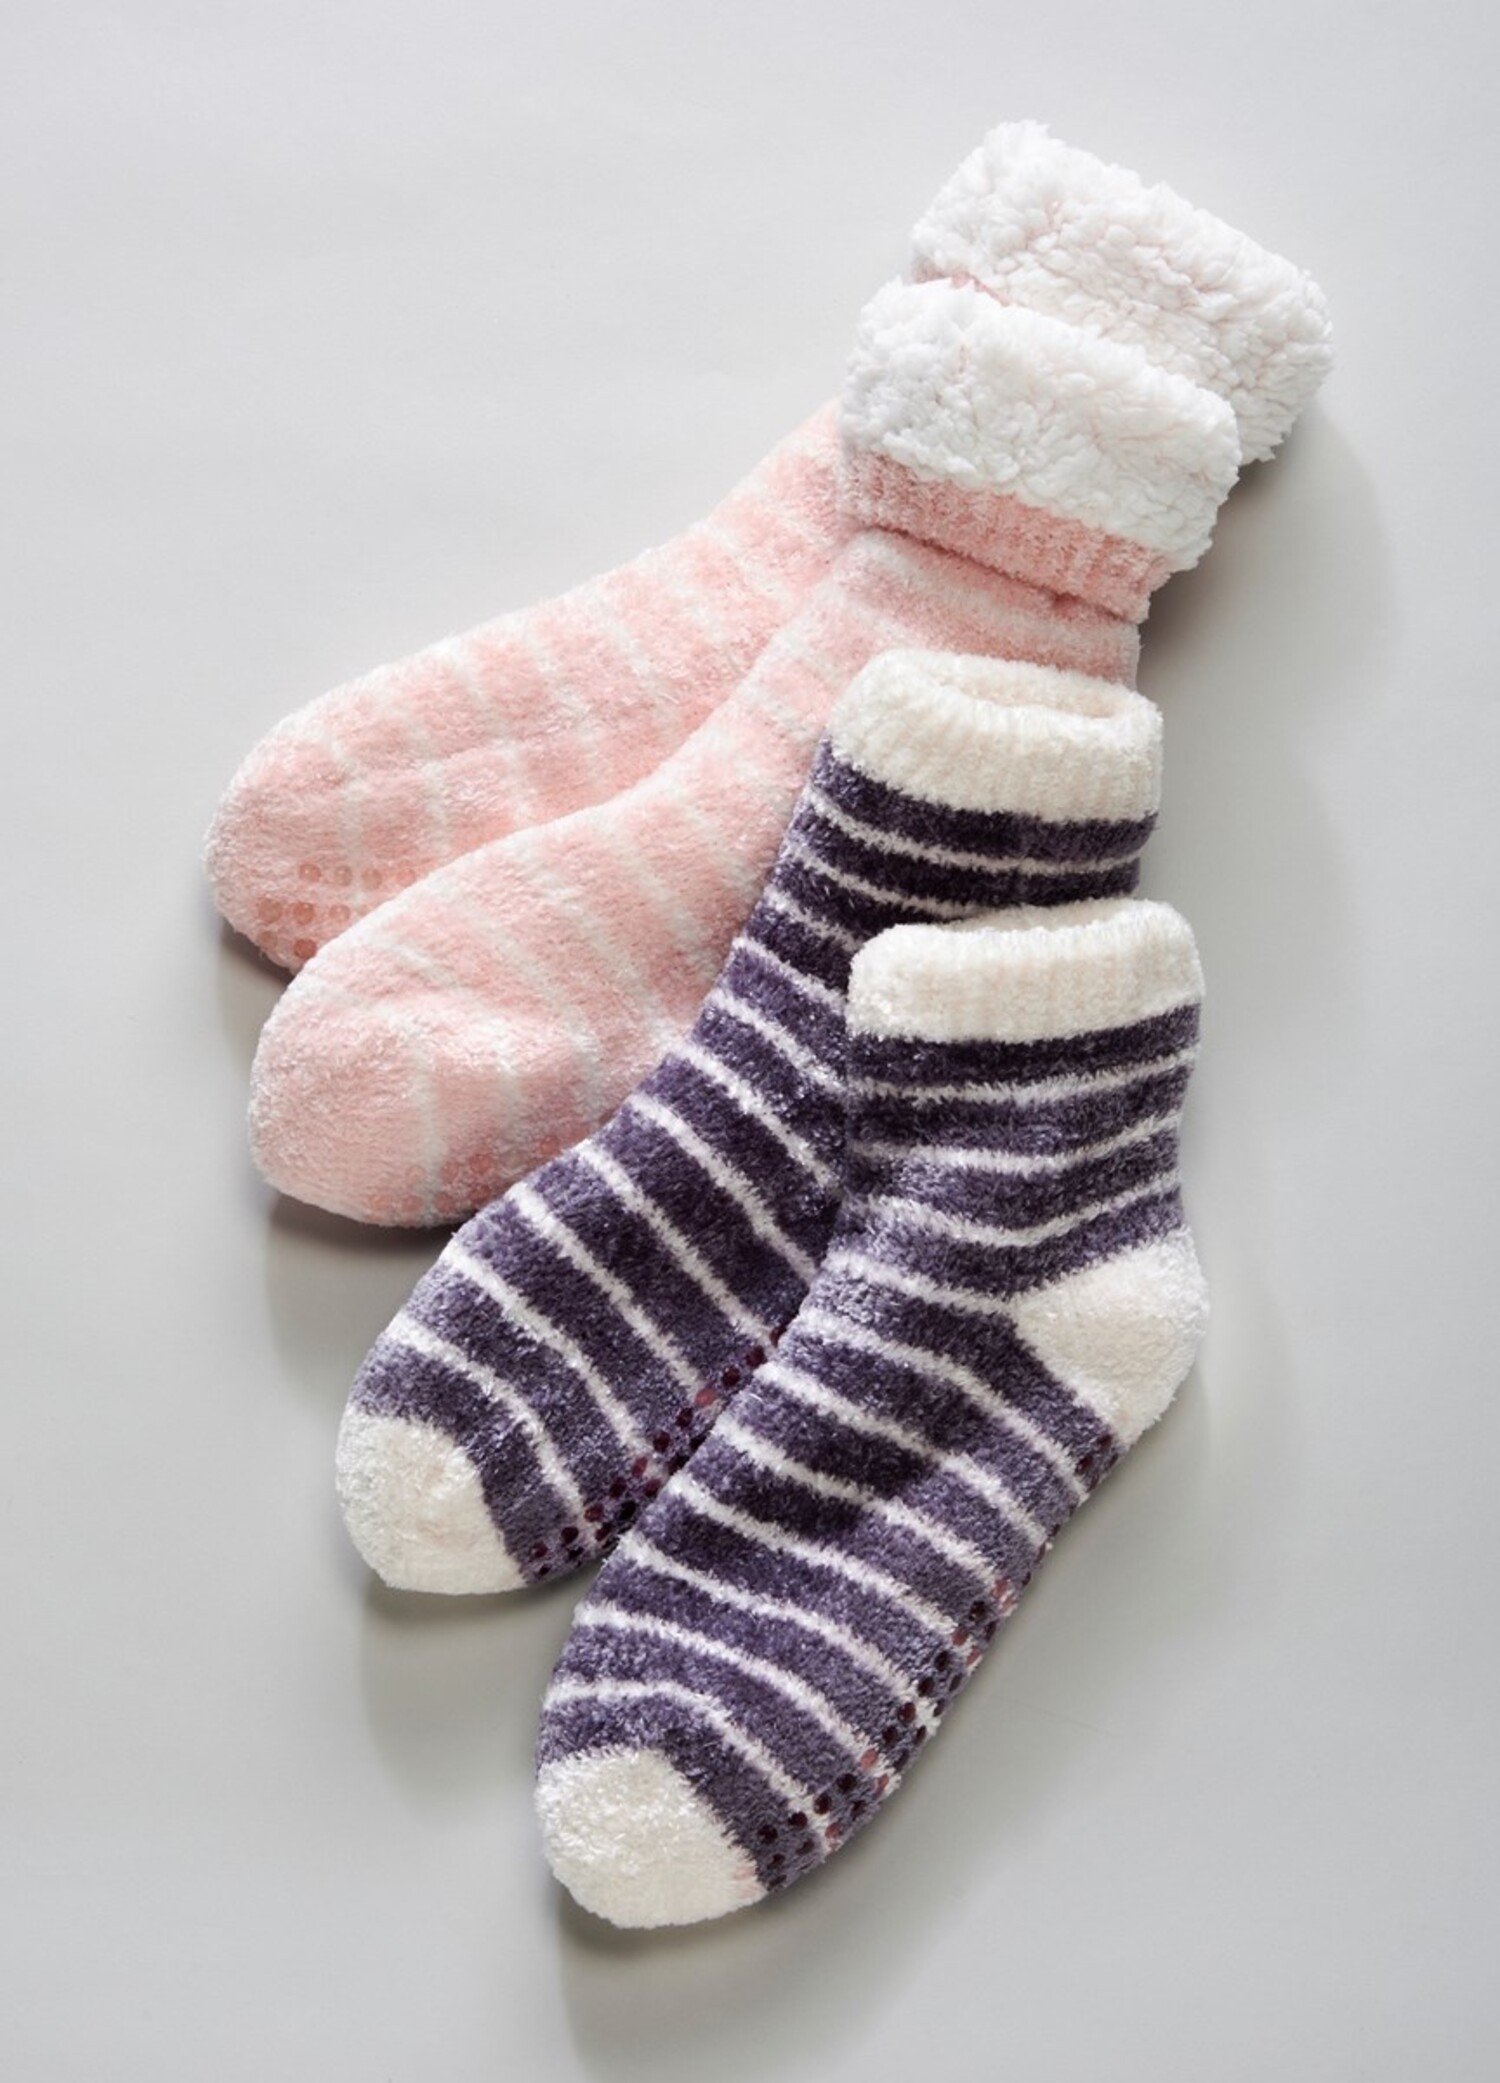 Jefferies Socks Llama and Hearts Fuzzy Non-Skid Slipper Socks 2 Pair Pack